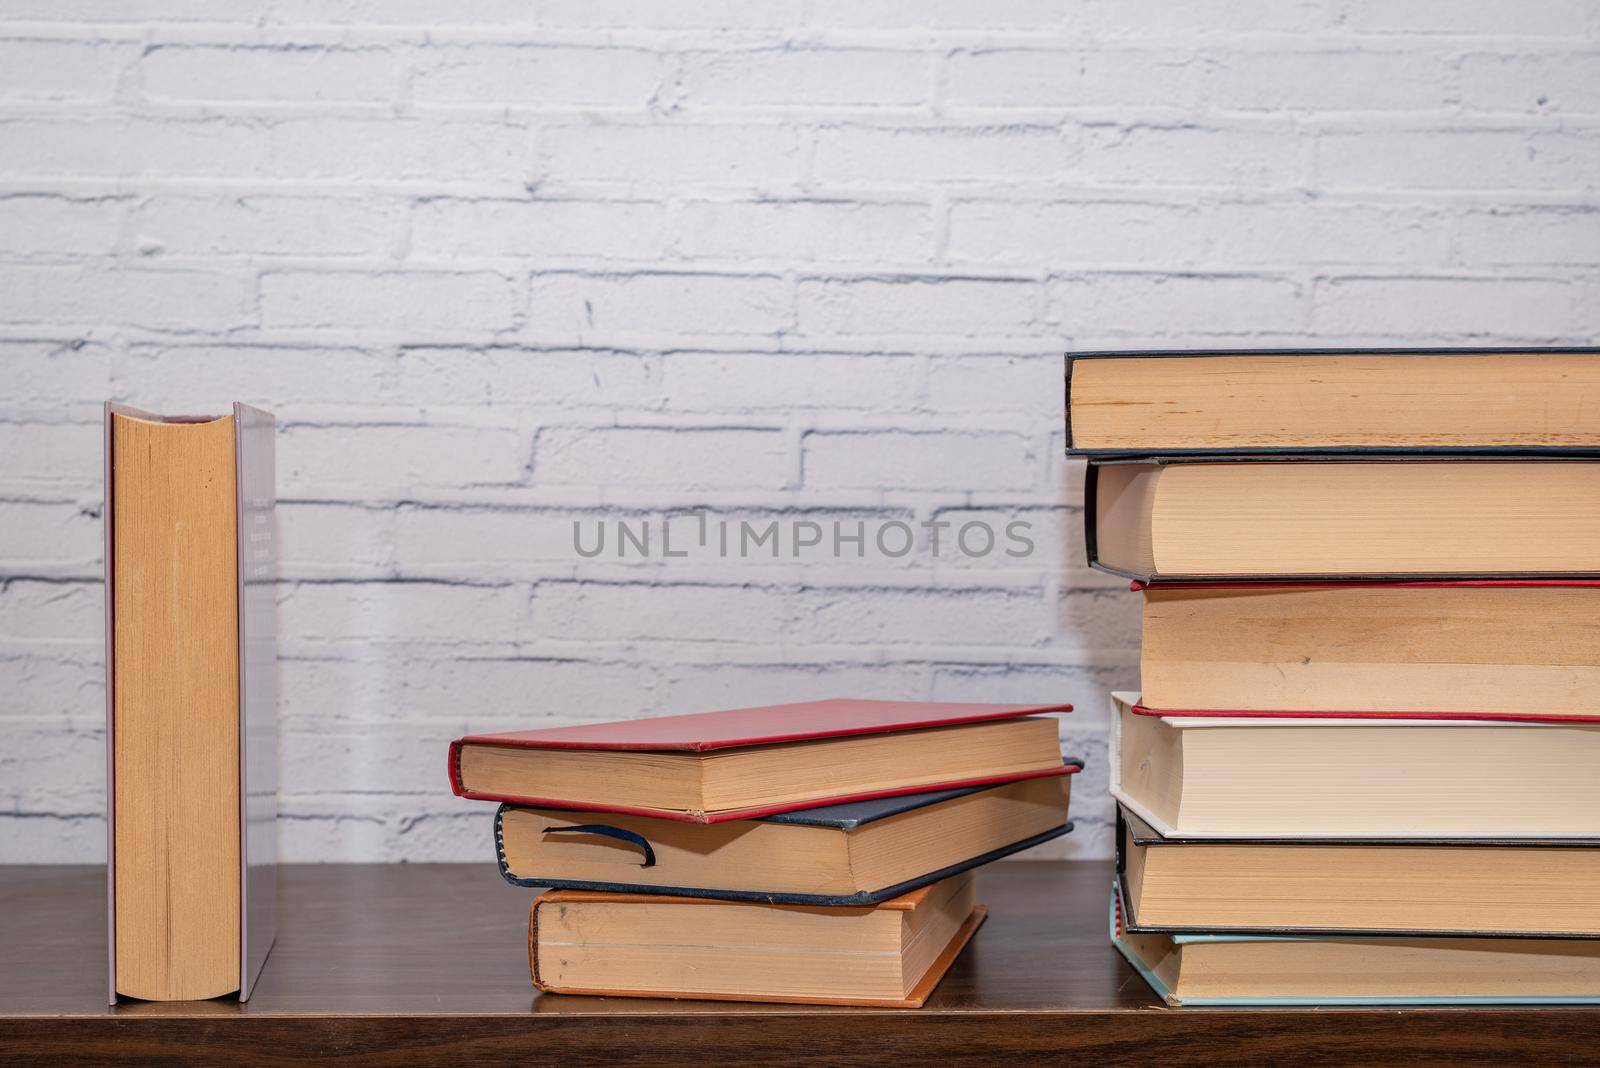 A few books of various sizes arranged on a dark wooden shelf by brambillasimone